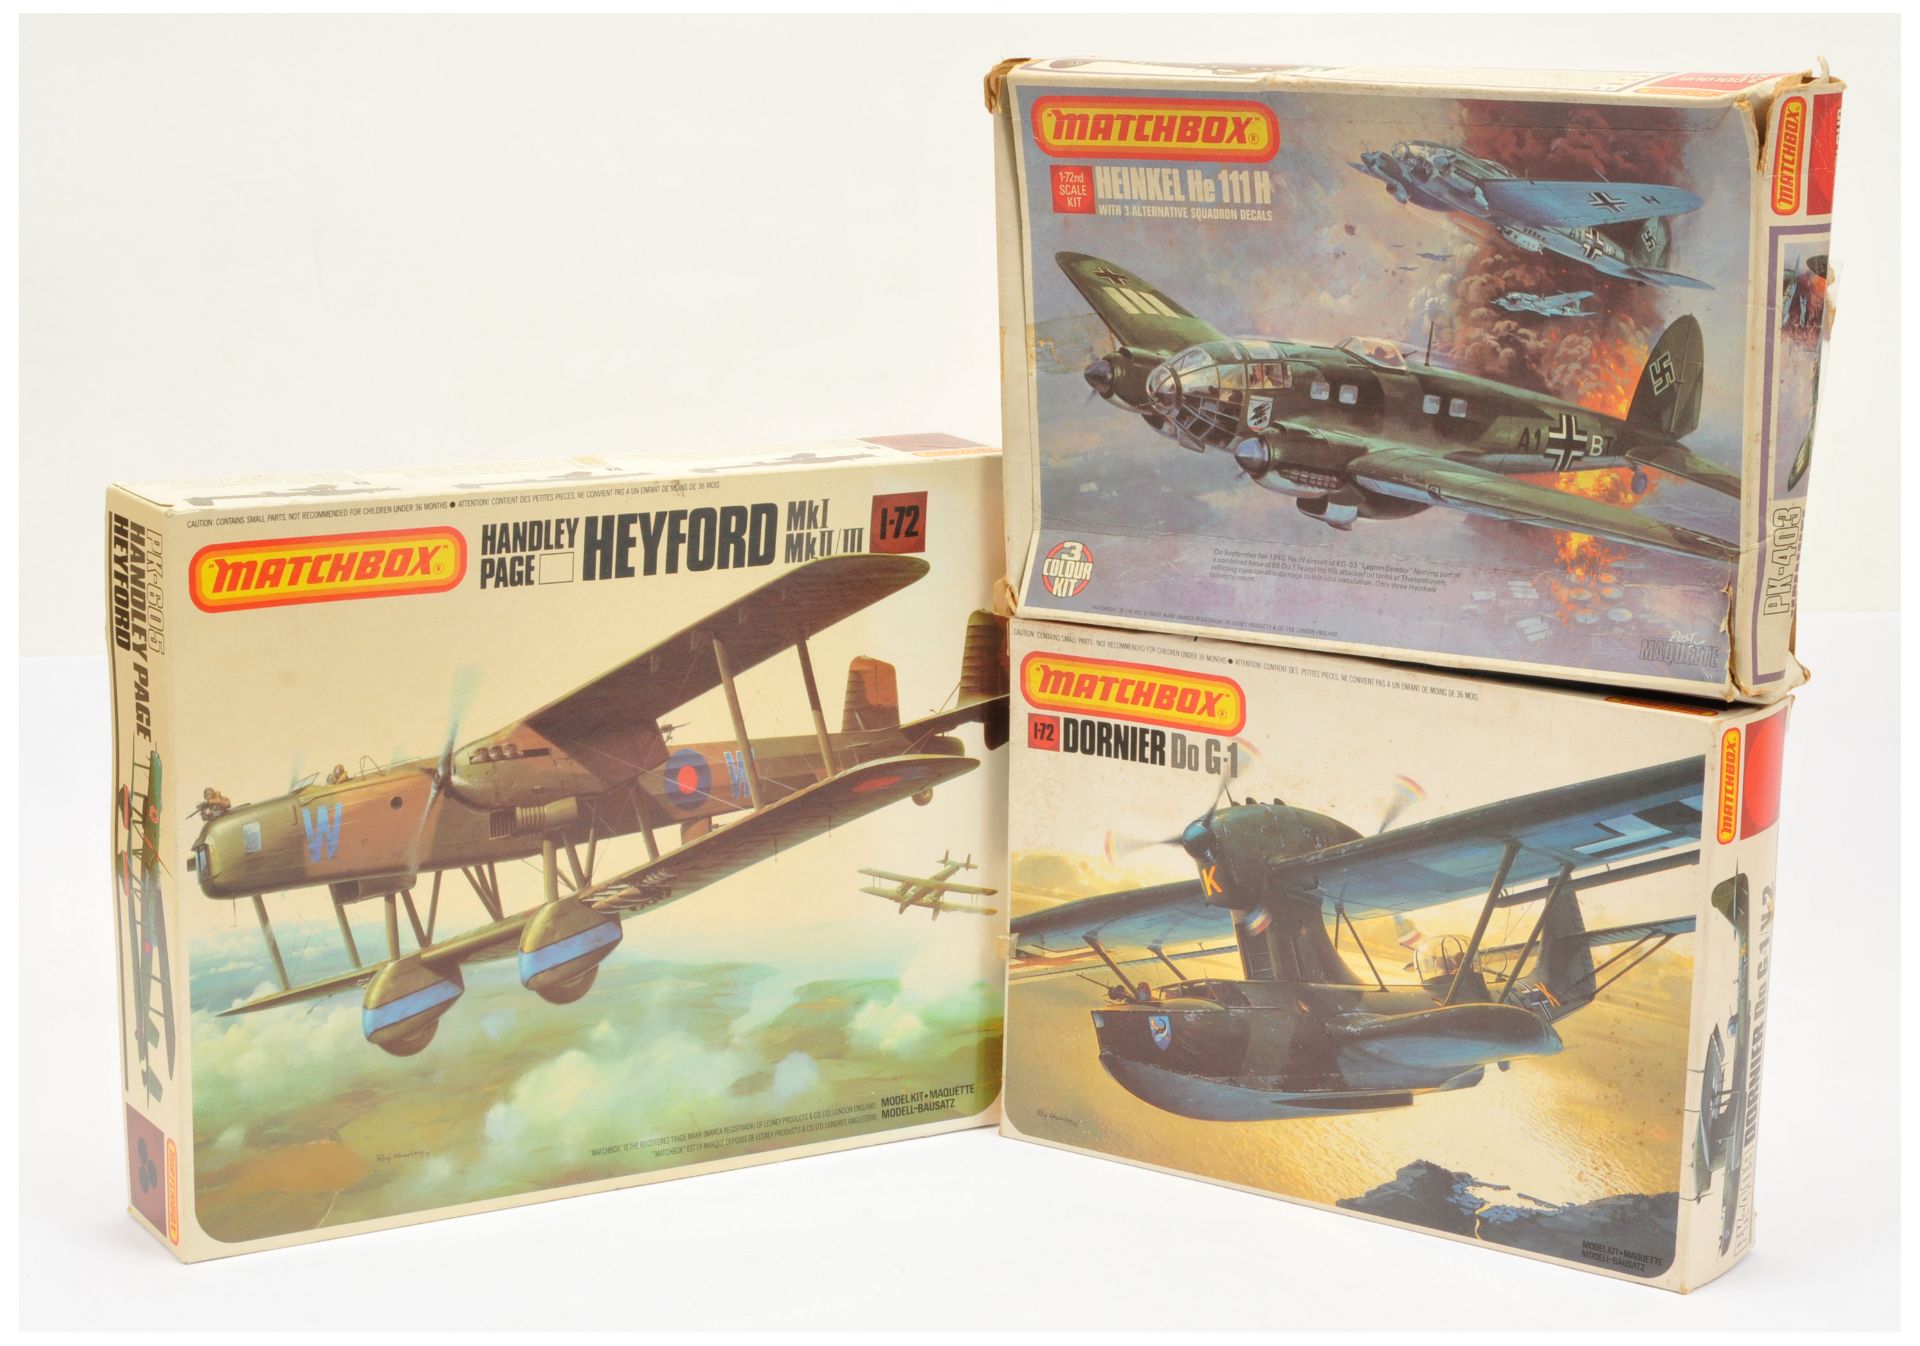 Matchbox - Group of Model Aircraft Kits